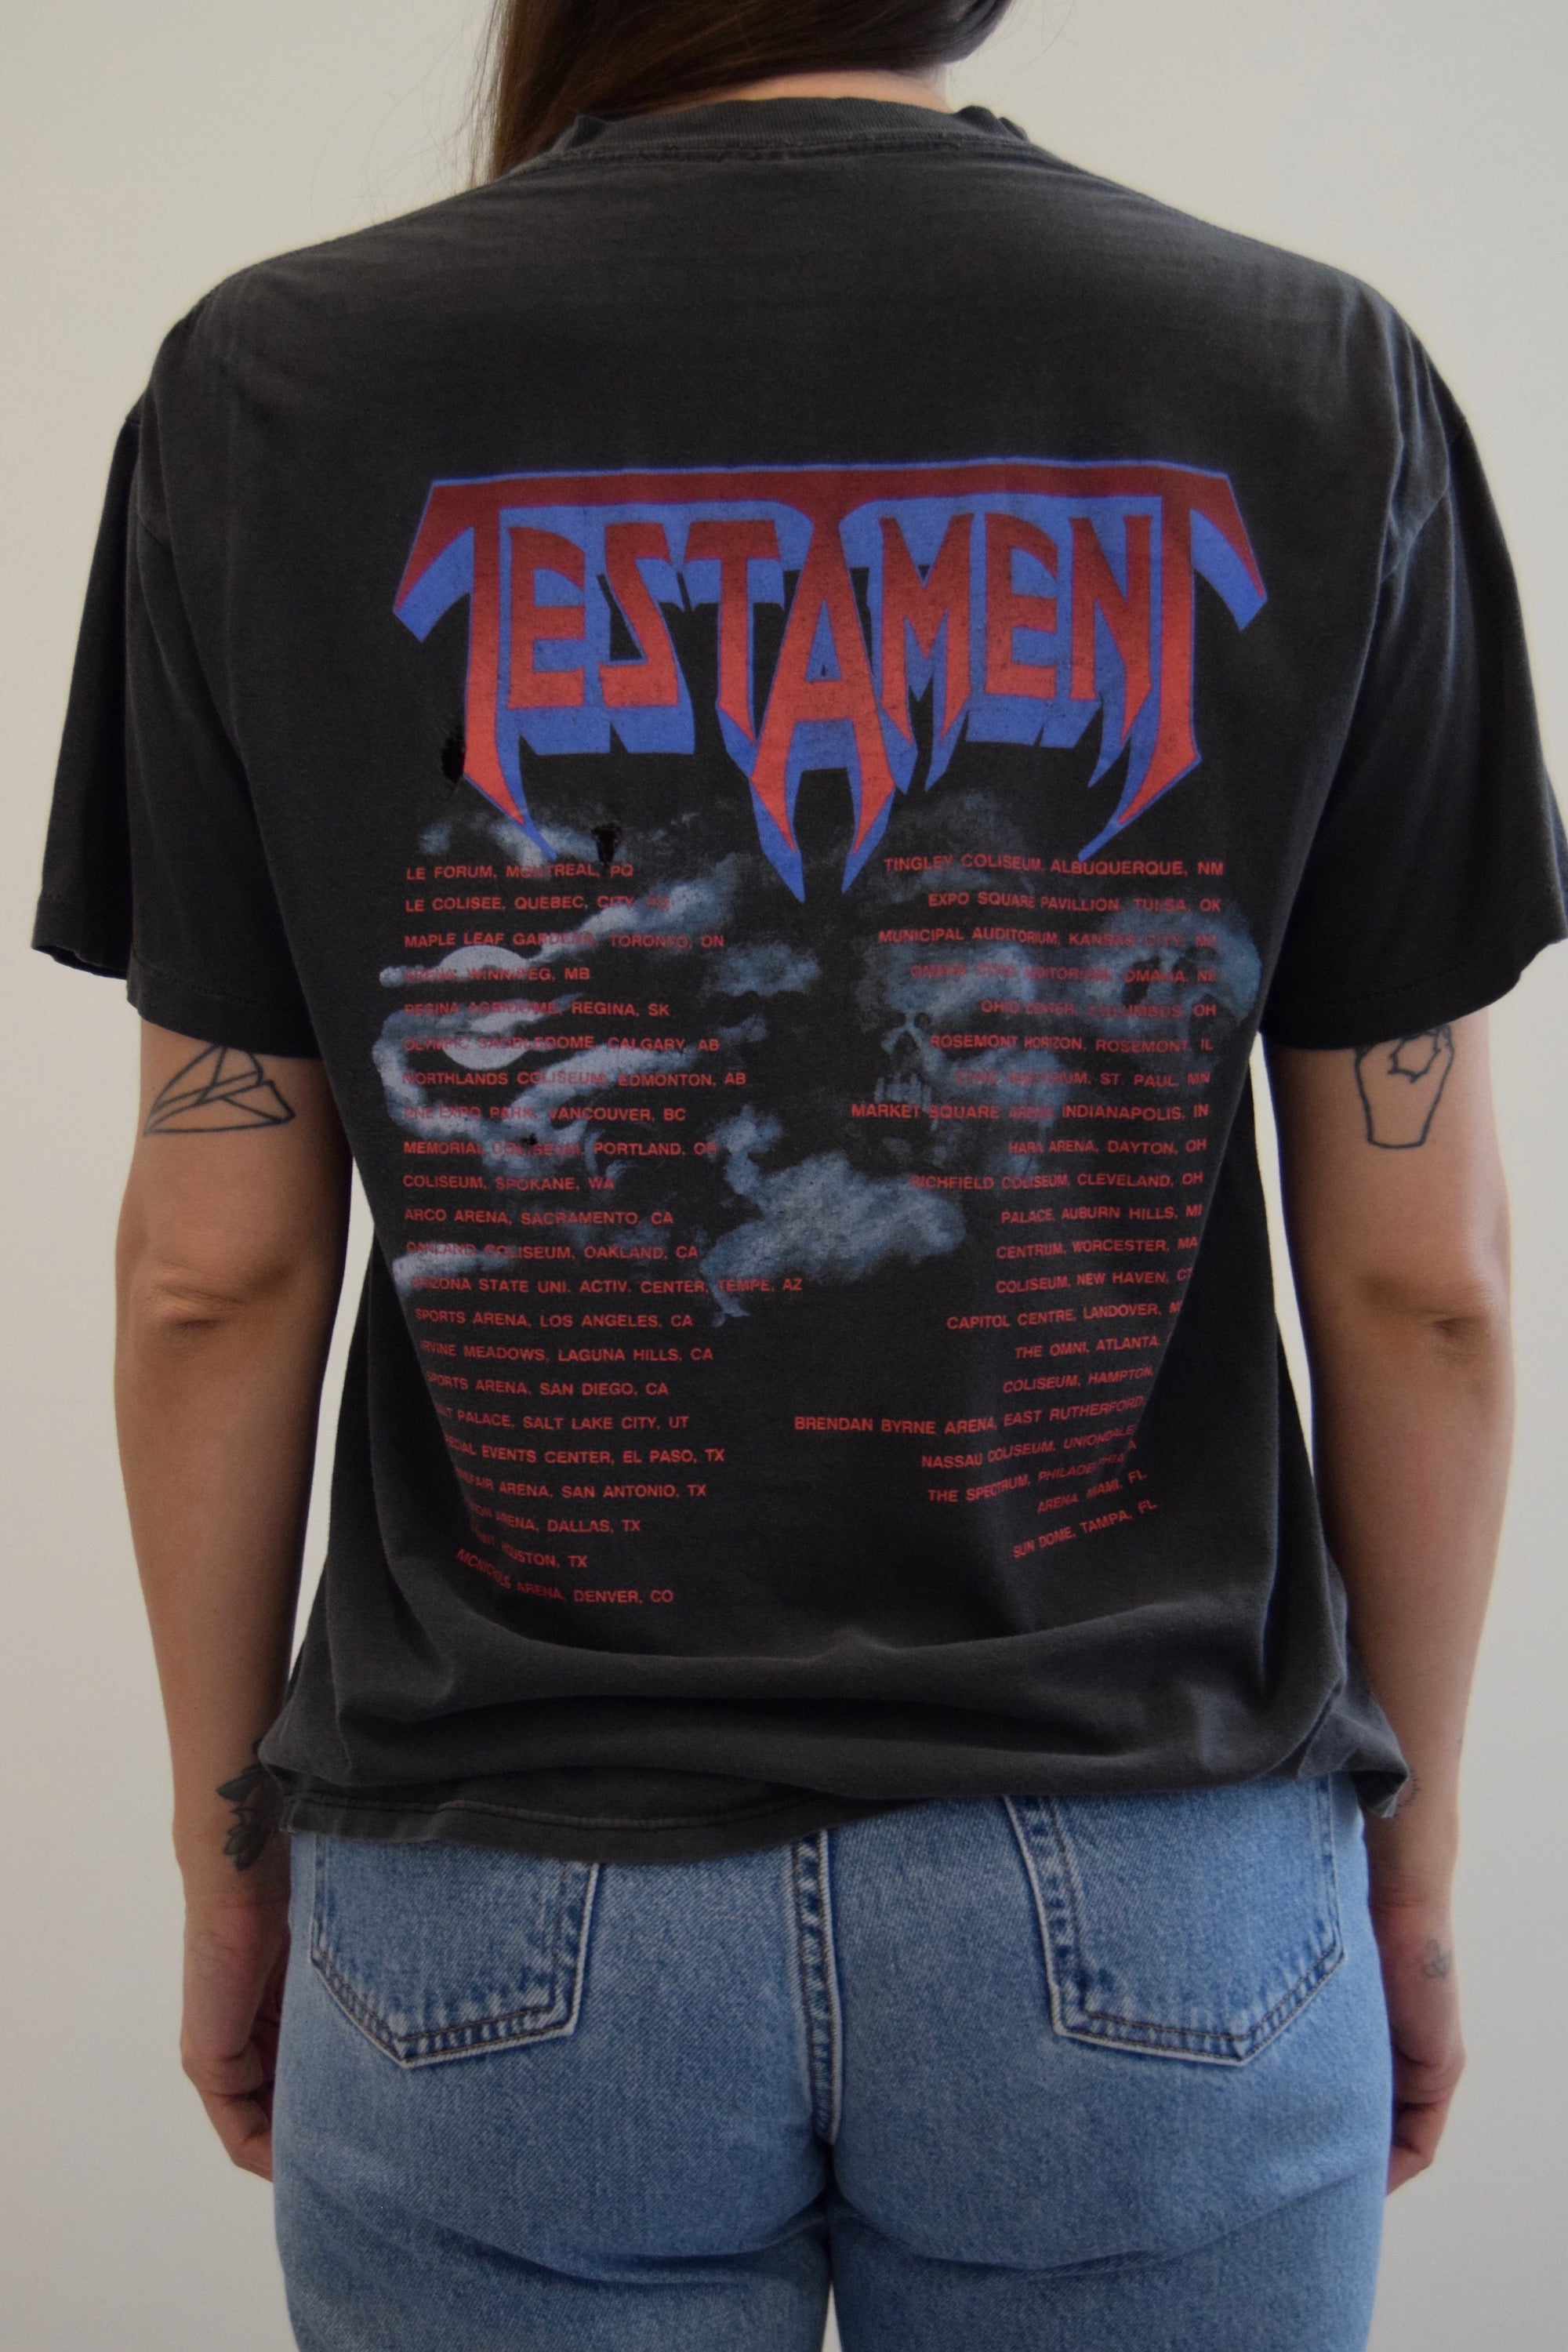 1990 Testament "Malpractice" Tour Tee